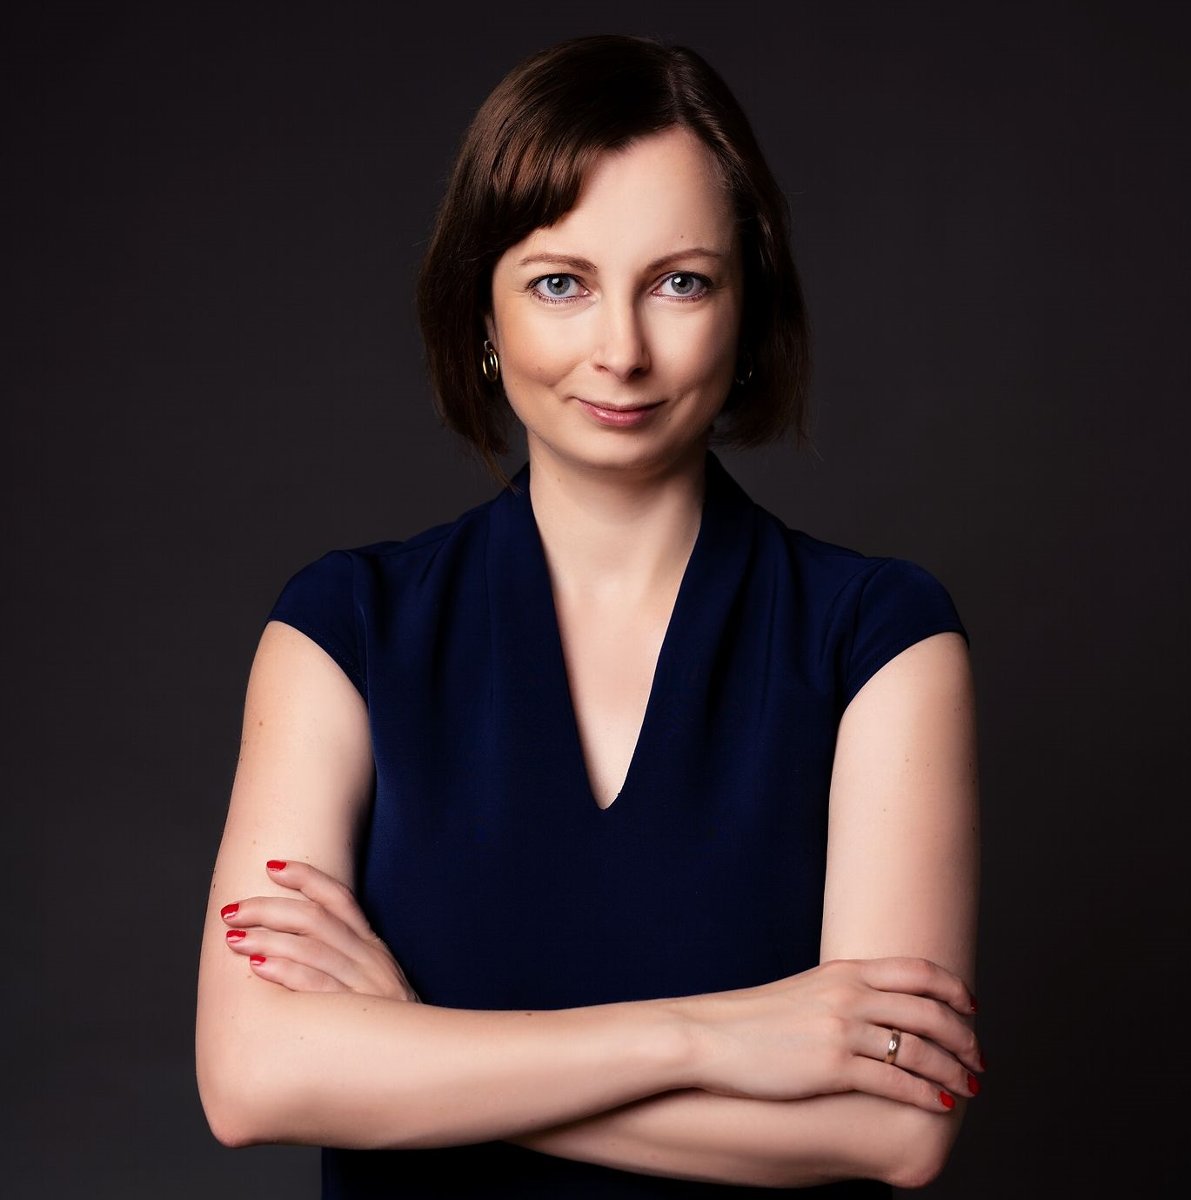 dr Anna Wilińska-Zelek